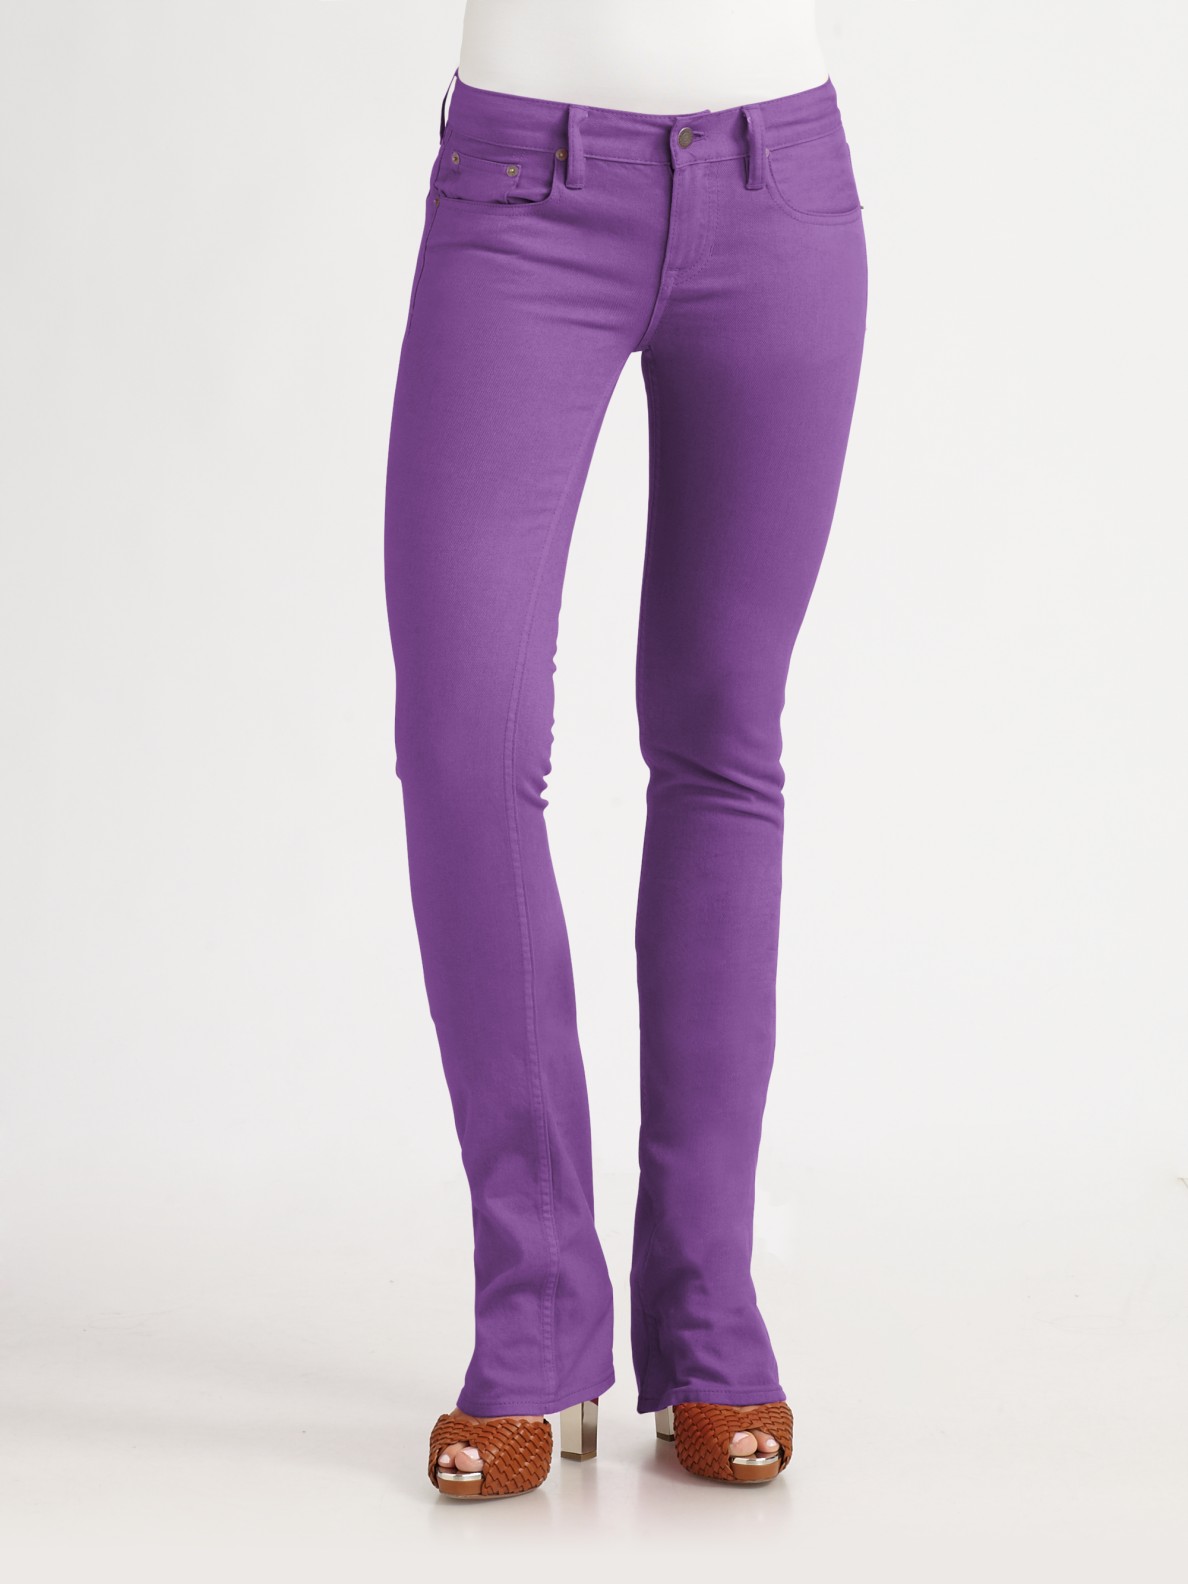 Lyst - Ralph Lauren Blue Label Stretch Slim Bootcut Jeans in Purple